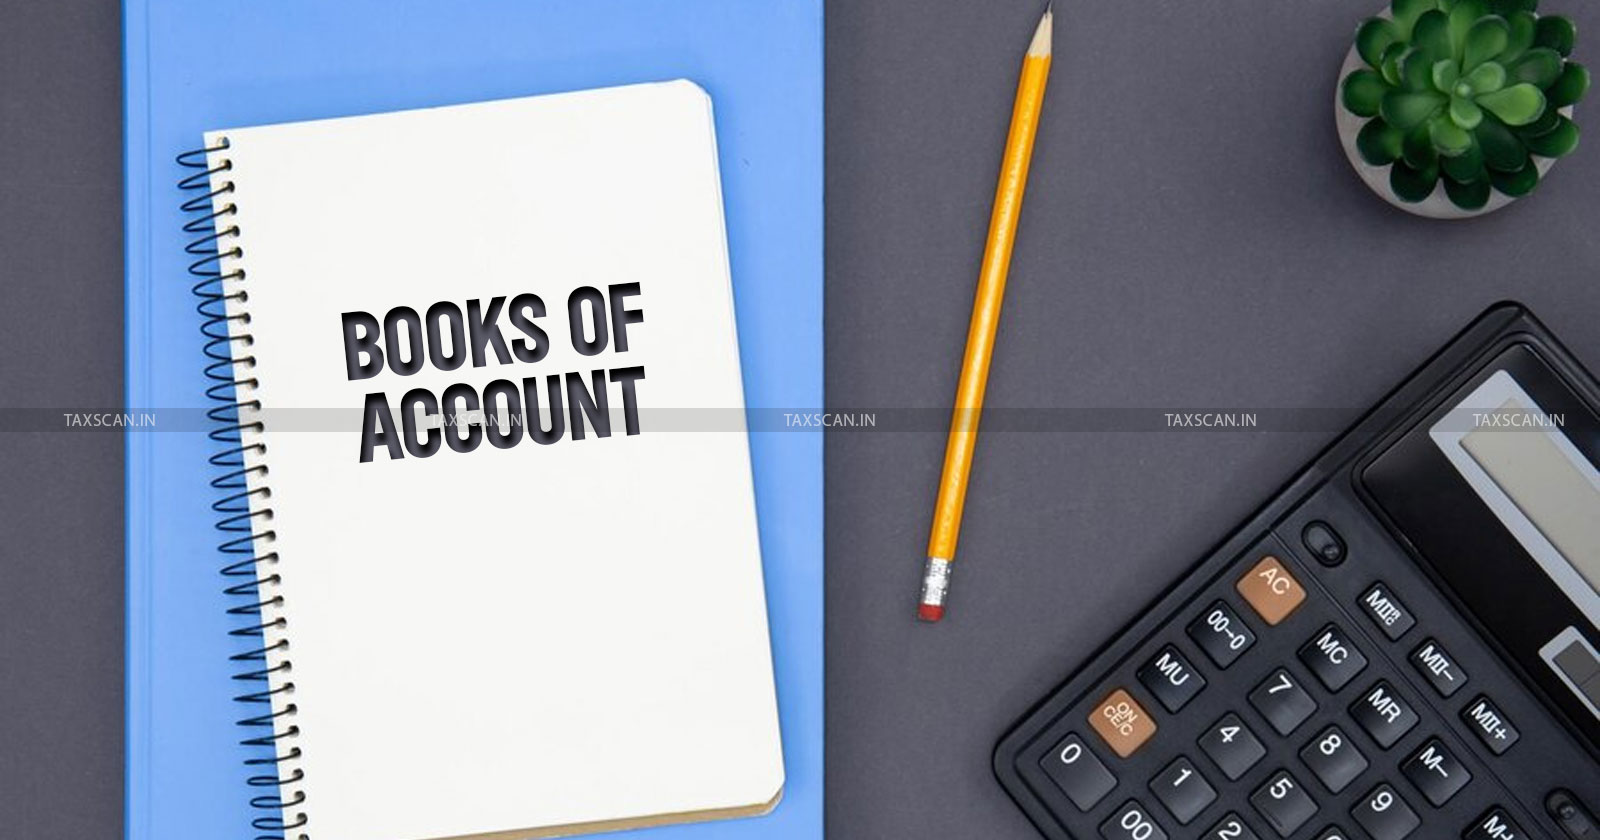 CESTAT - Service Tax Demand - Umesh Tilak Yadhav - Examination of Books of Accounts - Books of Accounts - Service Tax - taxscan